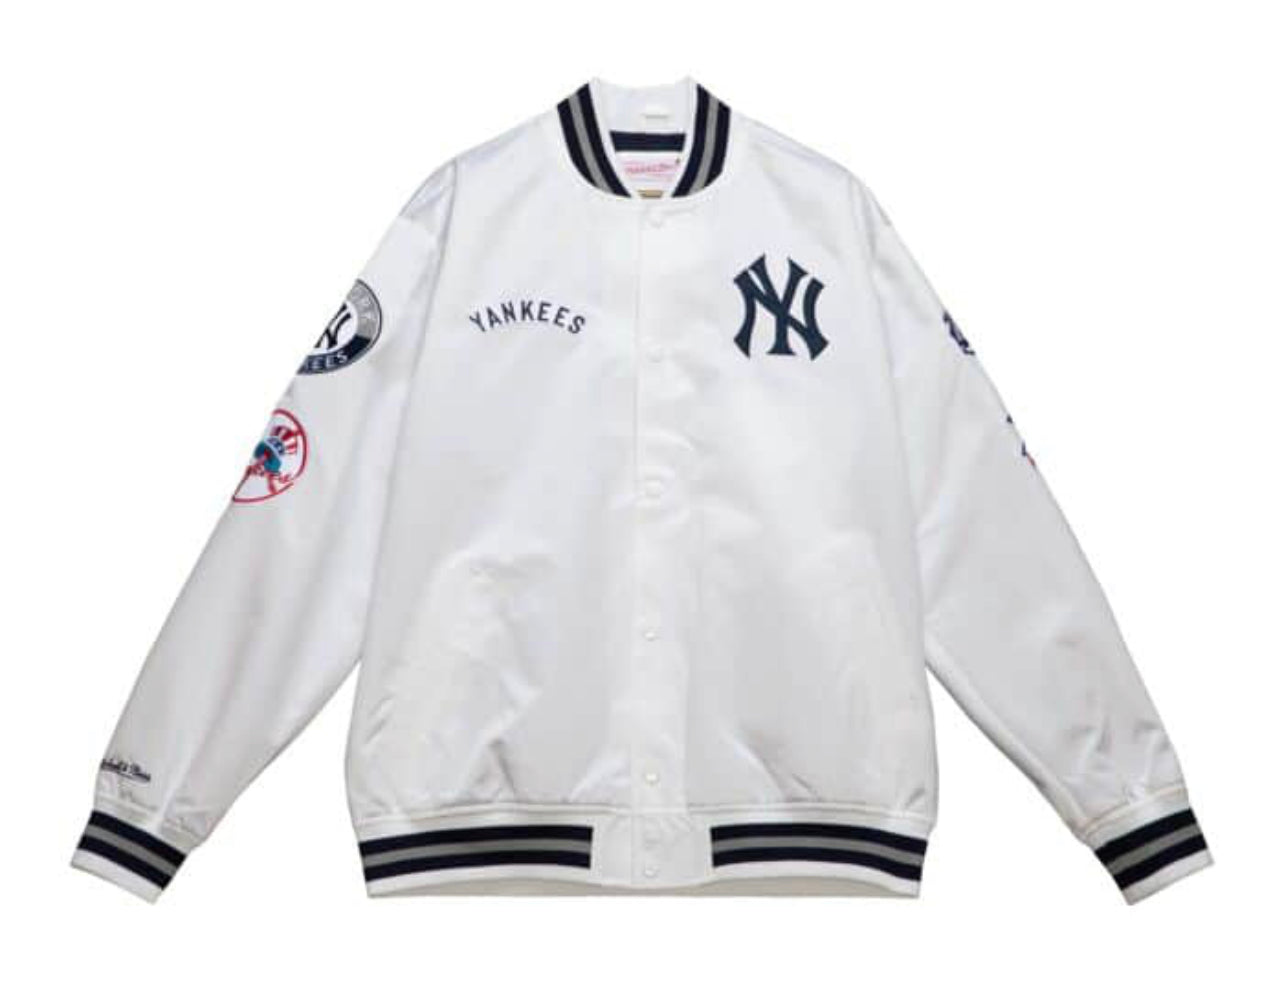 Mitchell&ness 1999 New York Yankees Satin Jacket Size Medium for